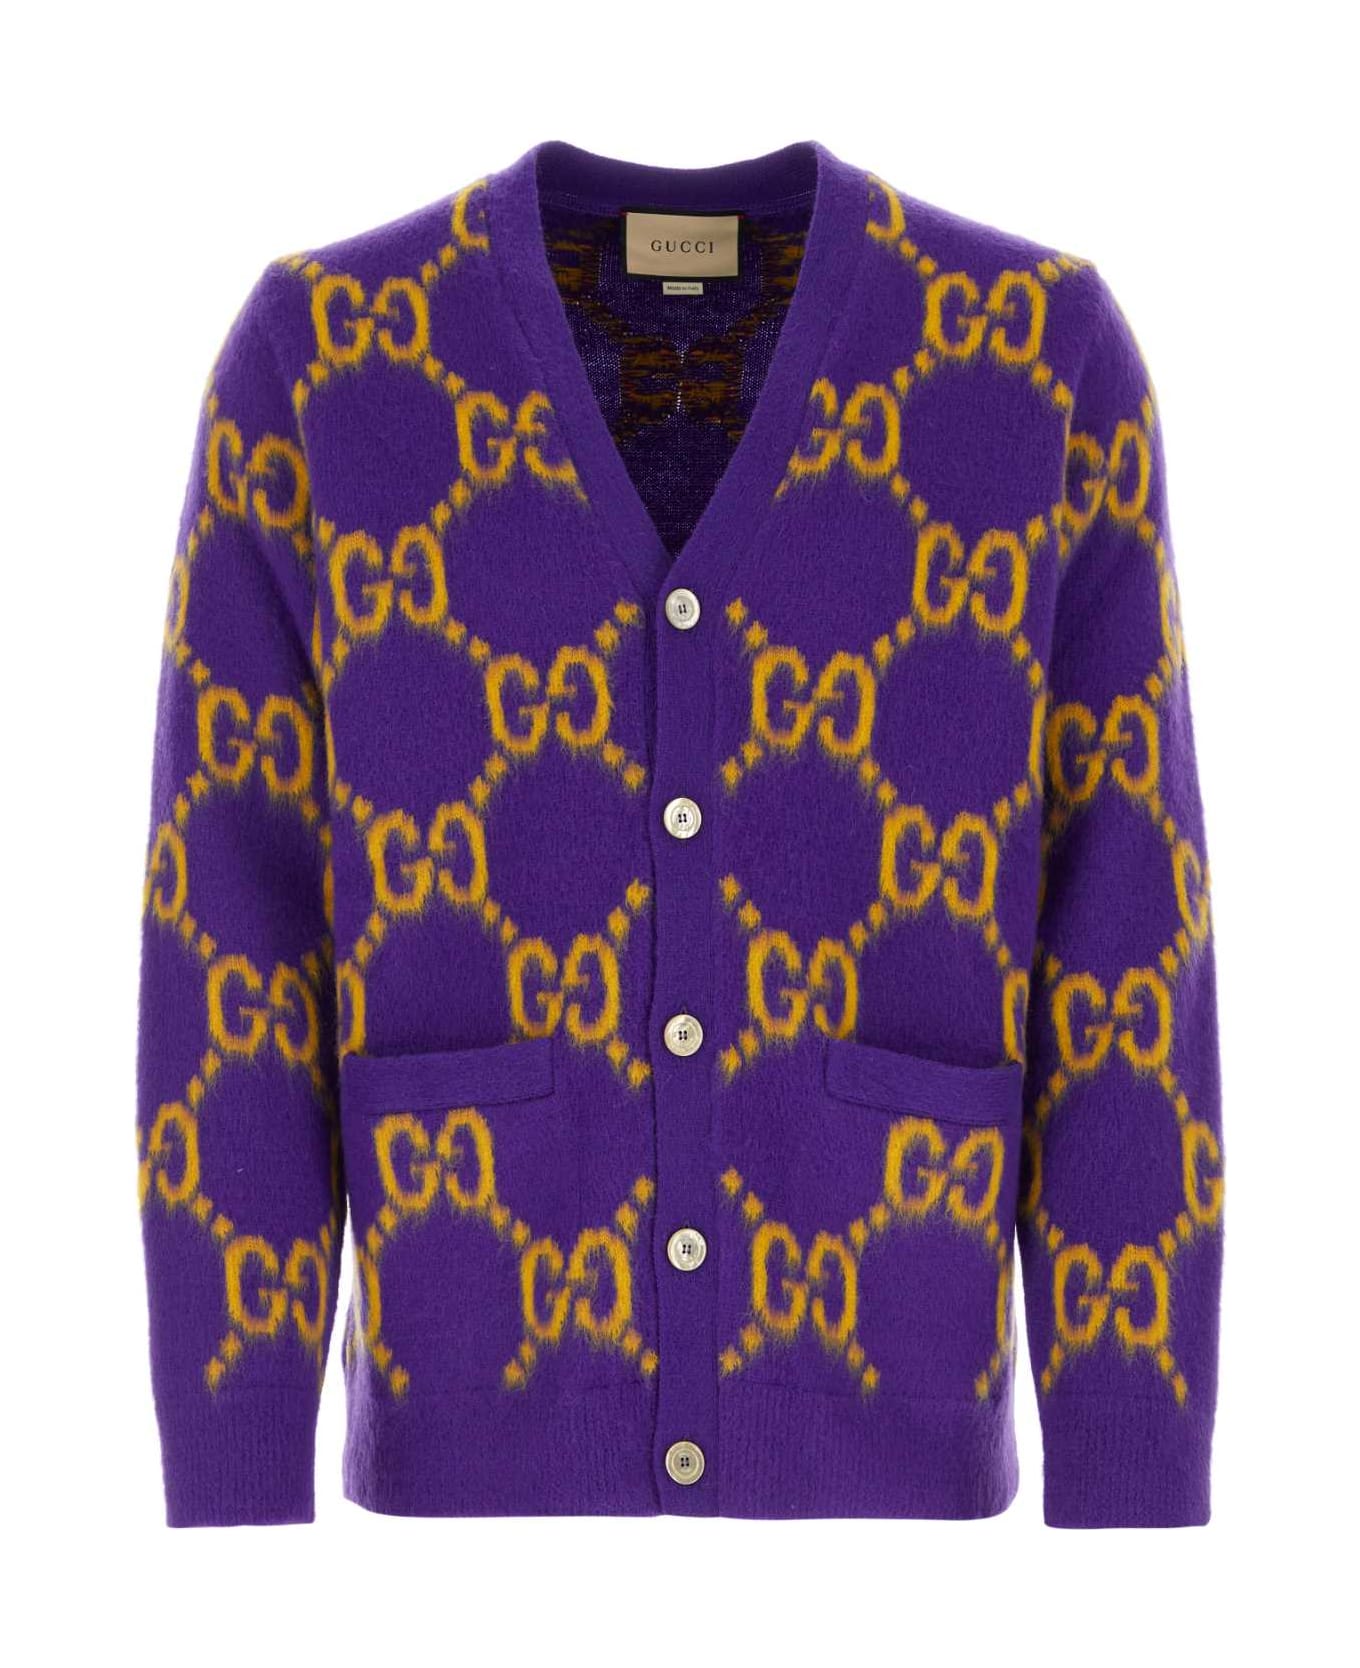 Gucci Embroidered Wool Cardigan - PURPLECROP カーディガン